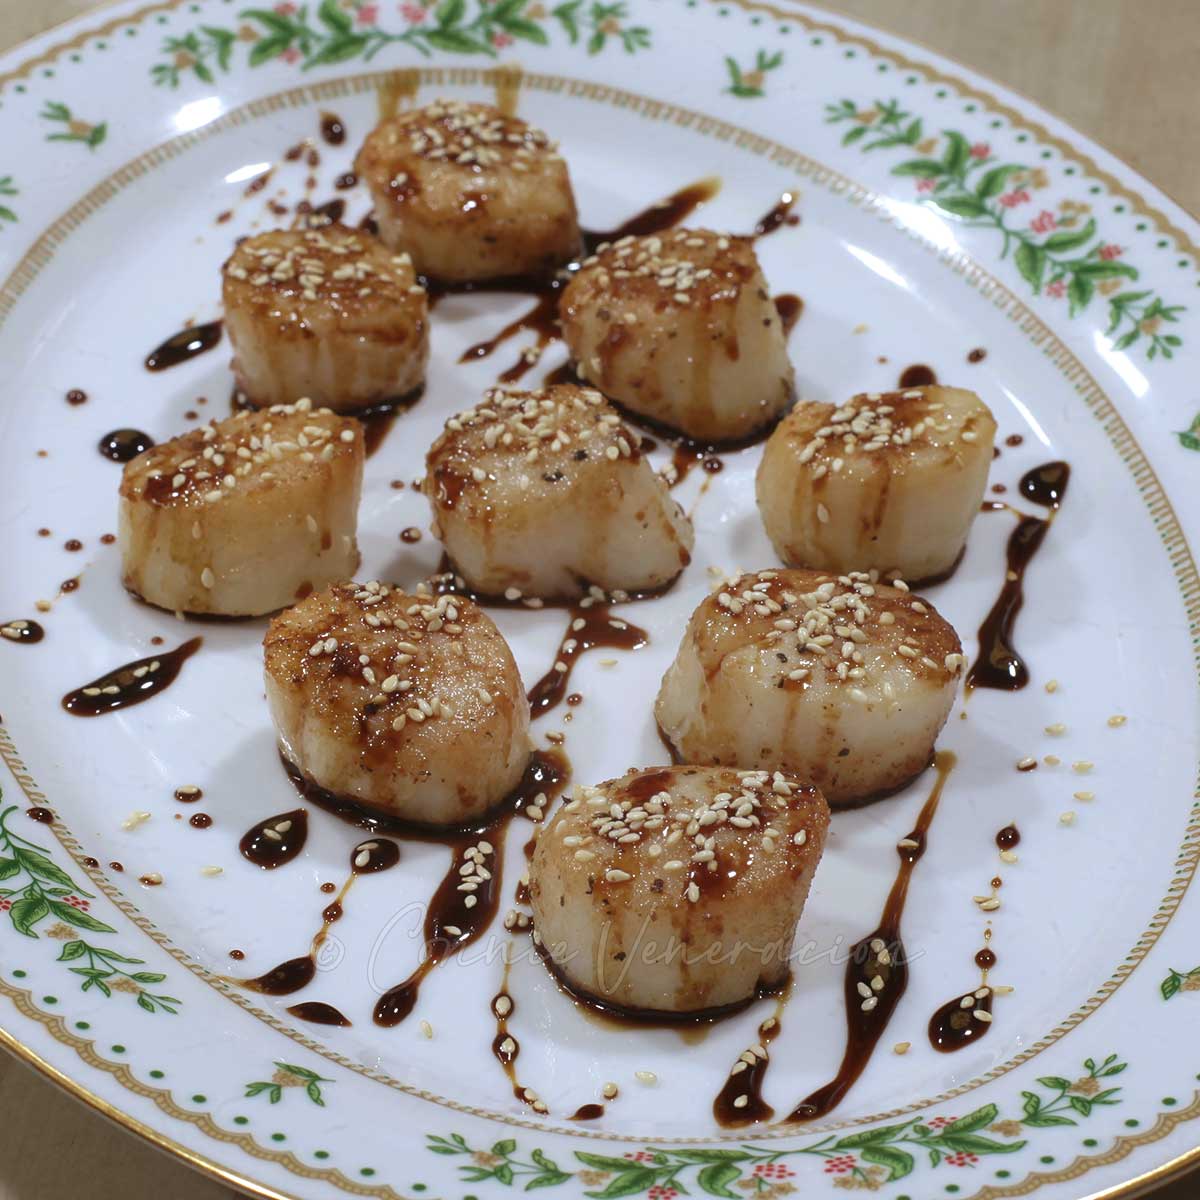 Seared scallops with gingered teriyaki sauce